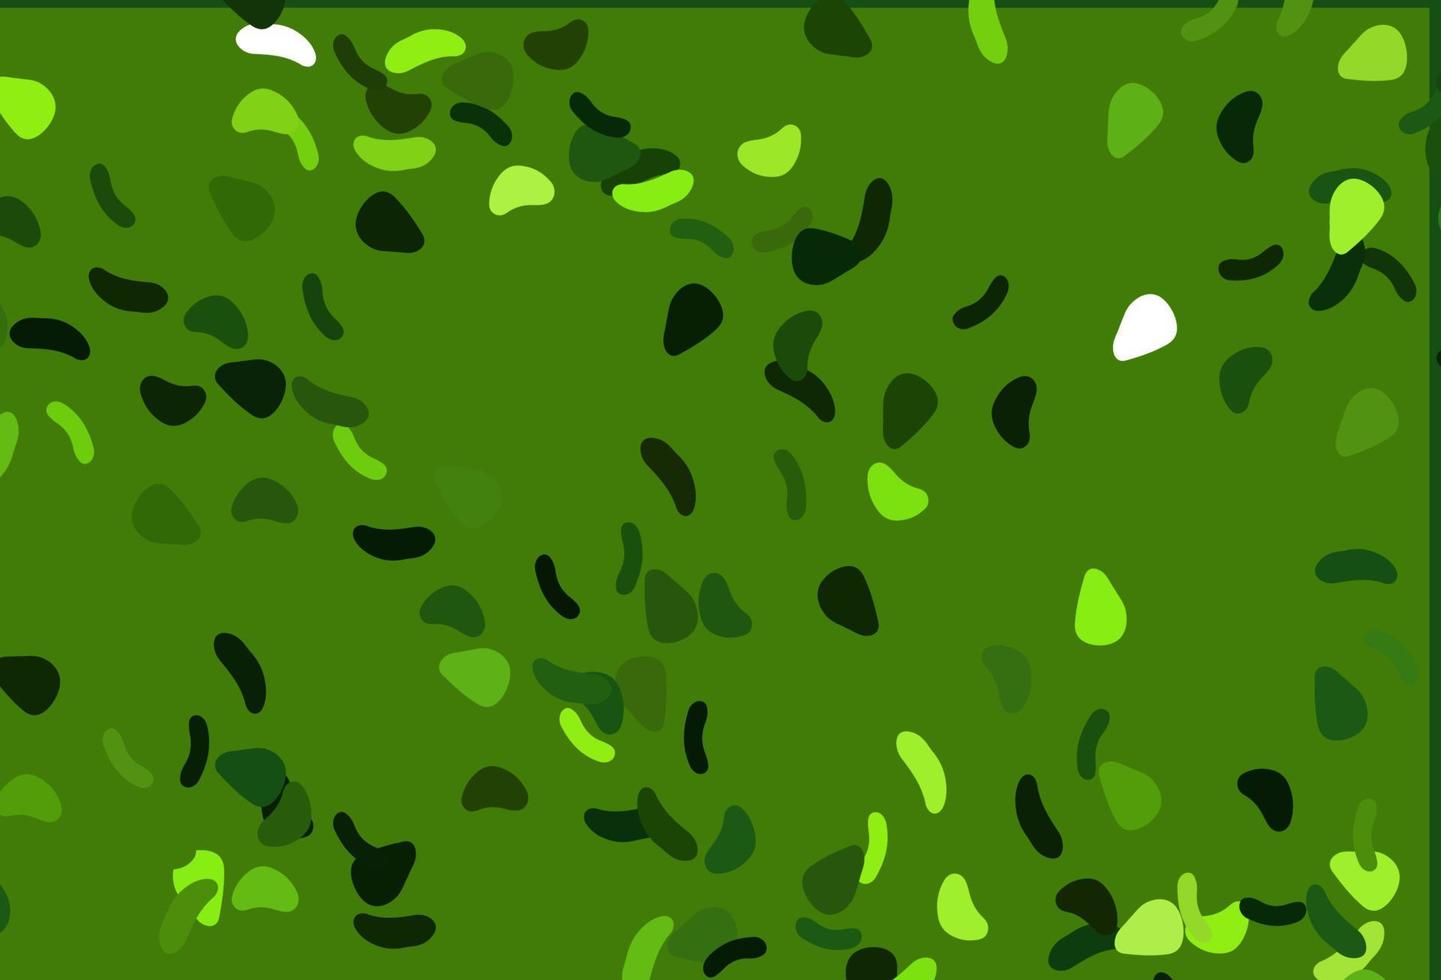 Telón de fondo de vector verde claro con formas abstractas.